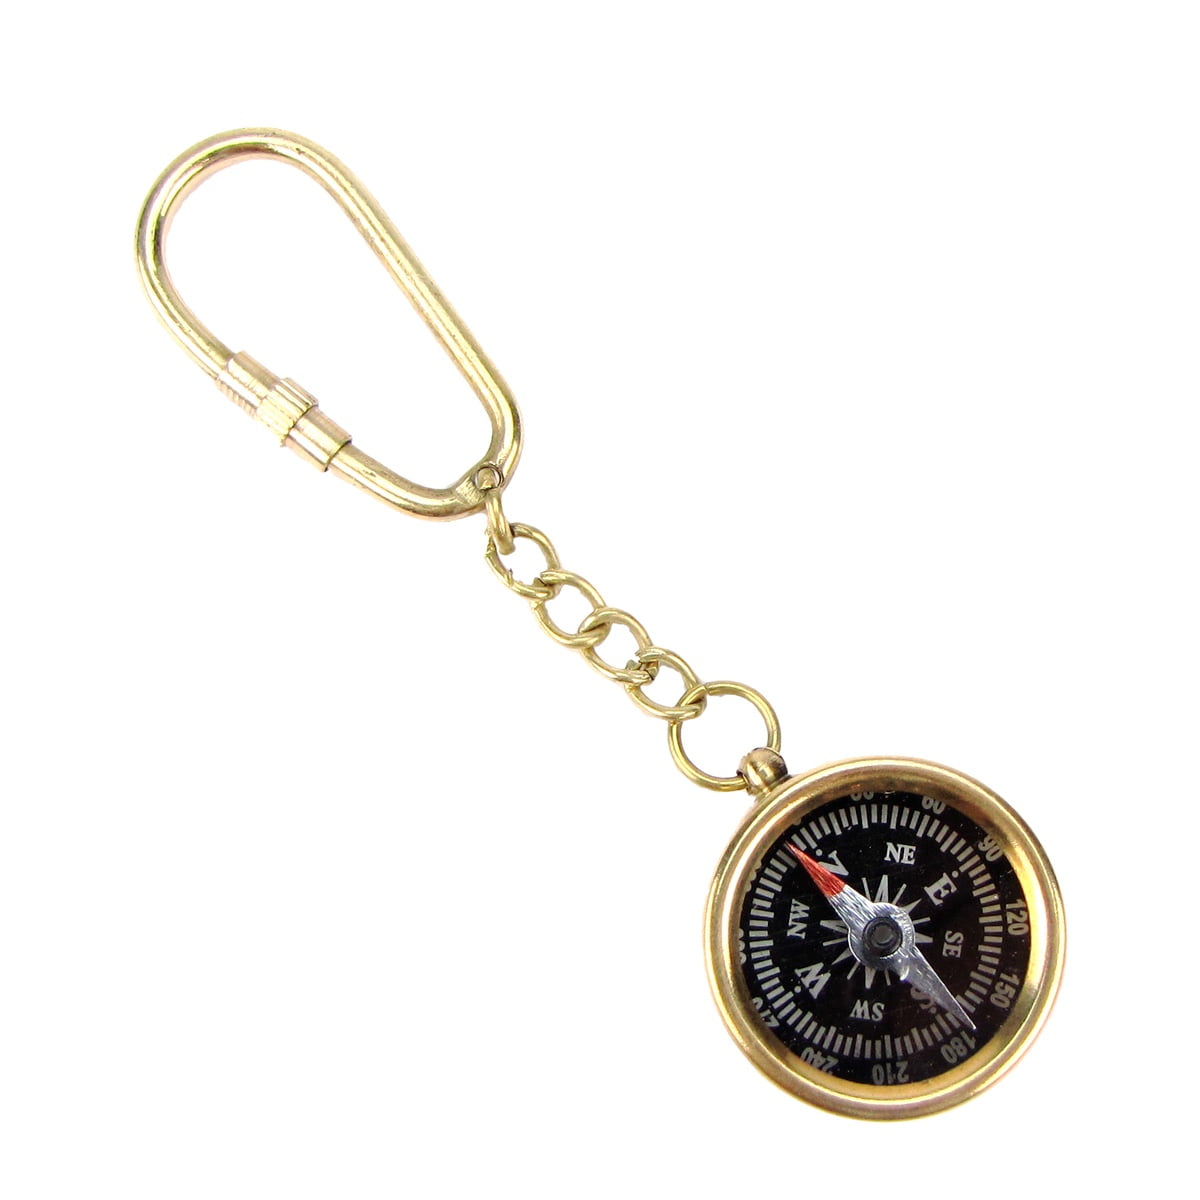 Brass Compass Key Chain Antique Compass Nautical Pocket Key Ring LOT OF 10 PCS 